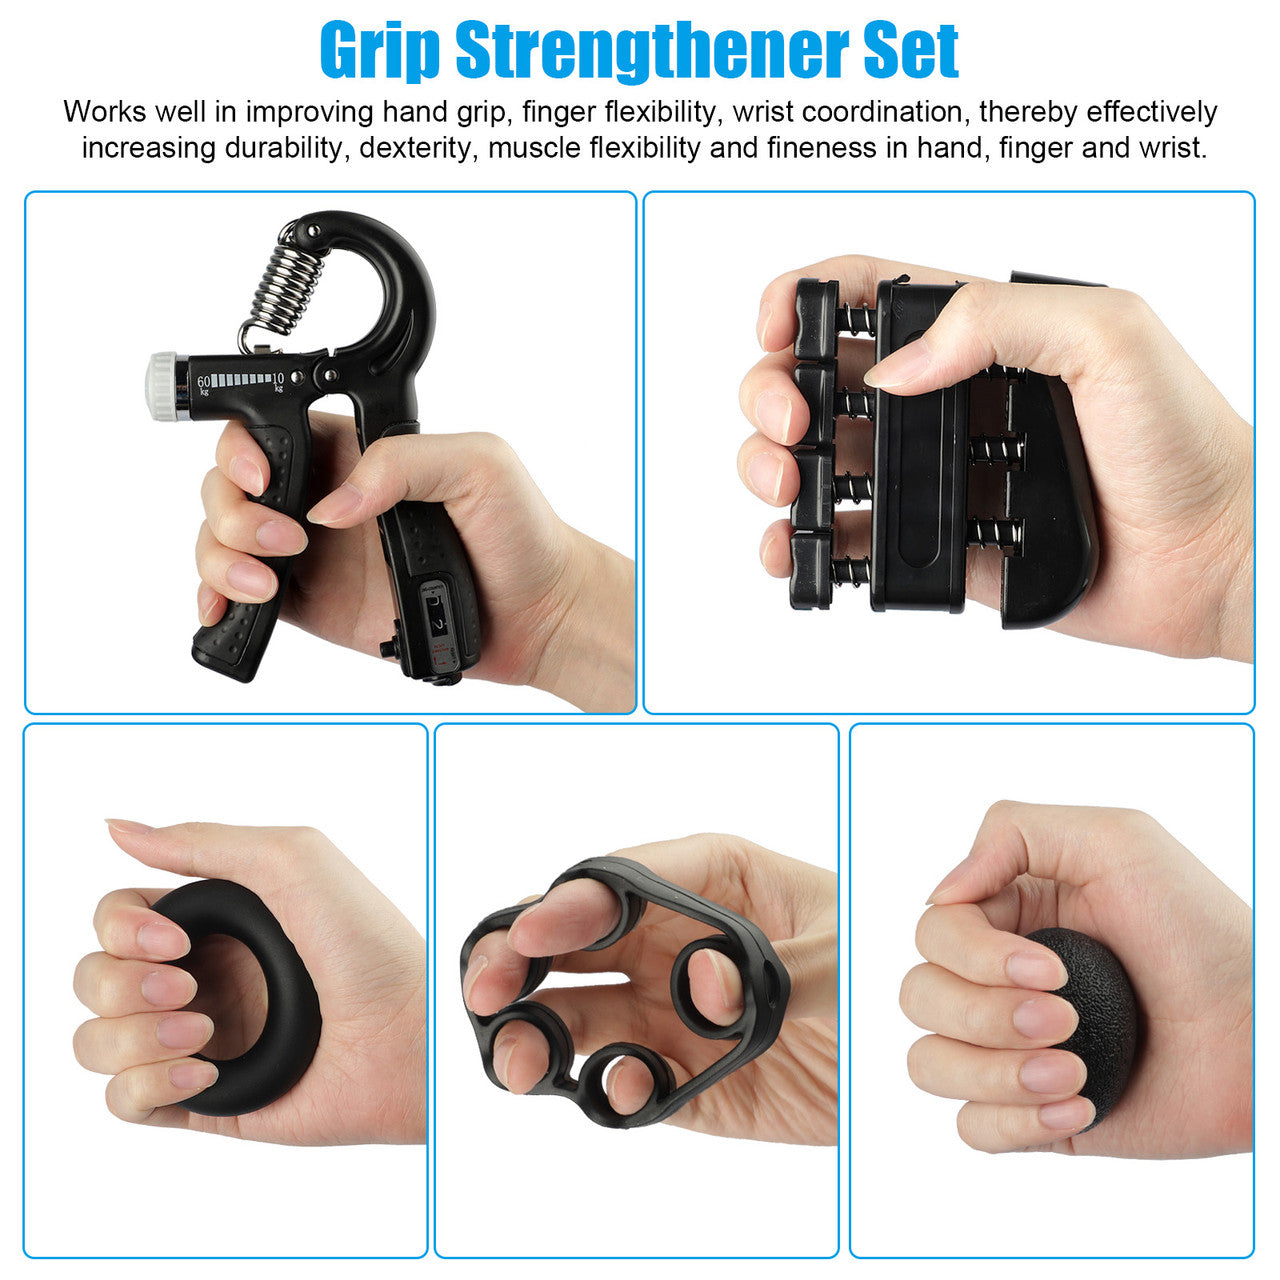 Hand Grip Strengthener Set, Black, 5pcs